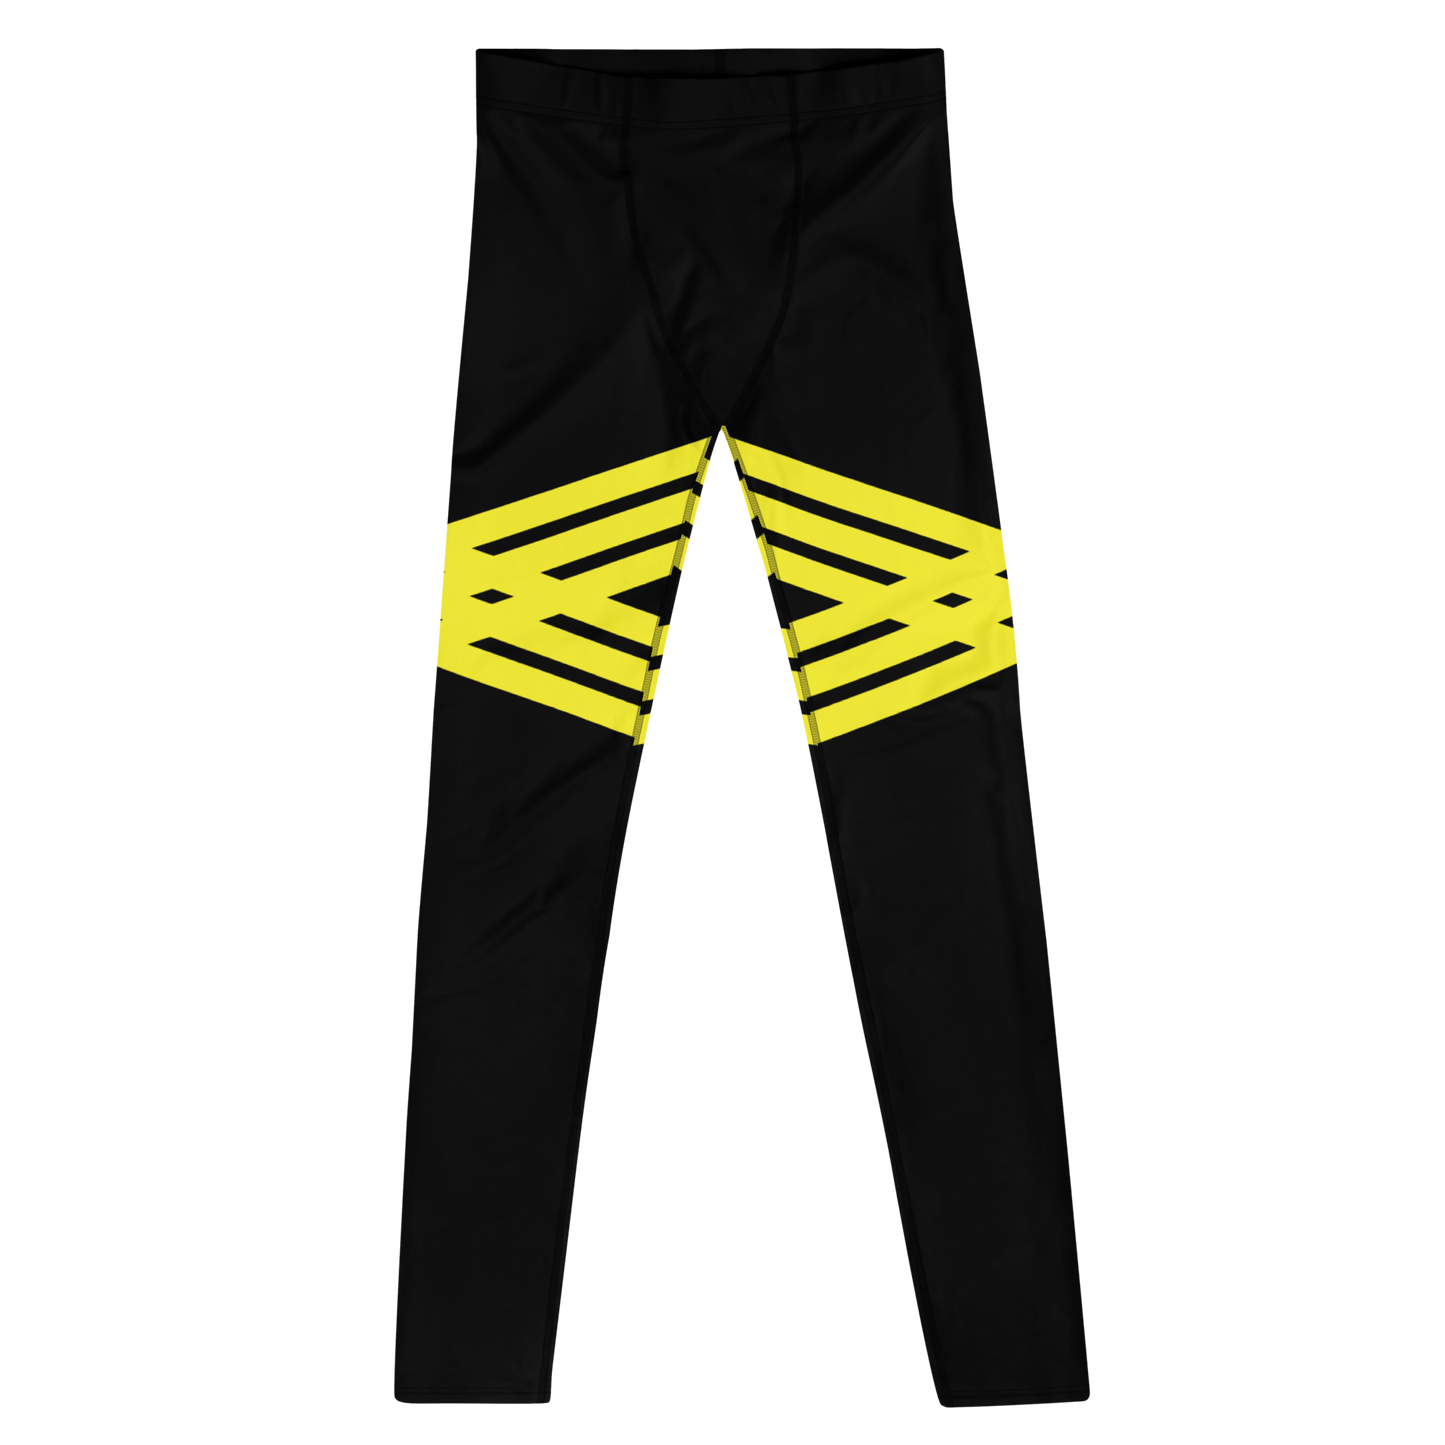 Xtreme Yellow Men's Leggings - Gifternaut